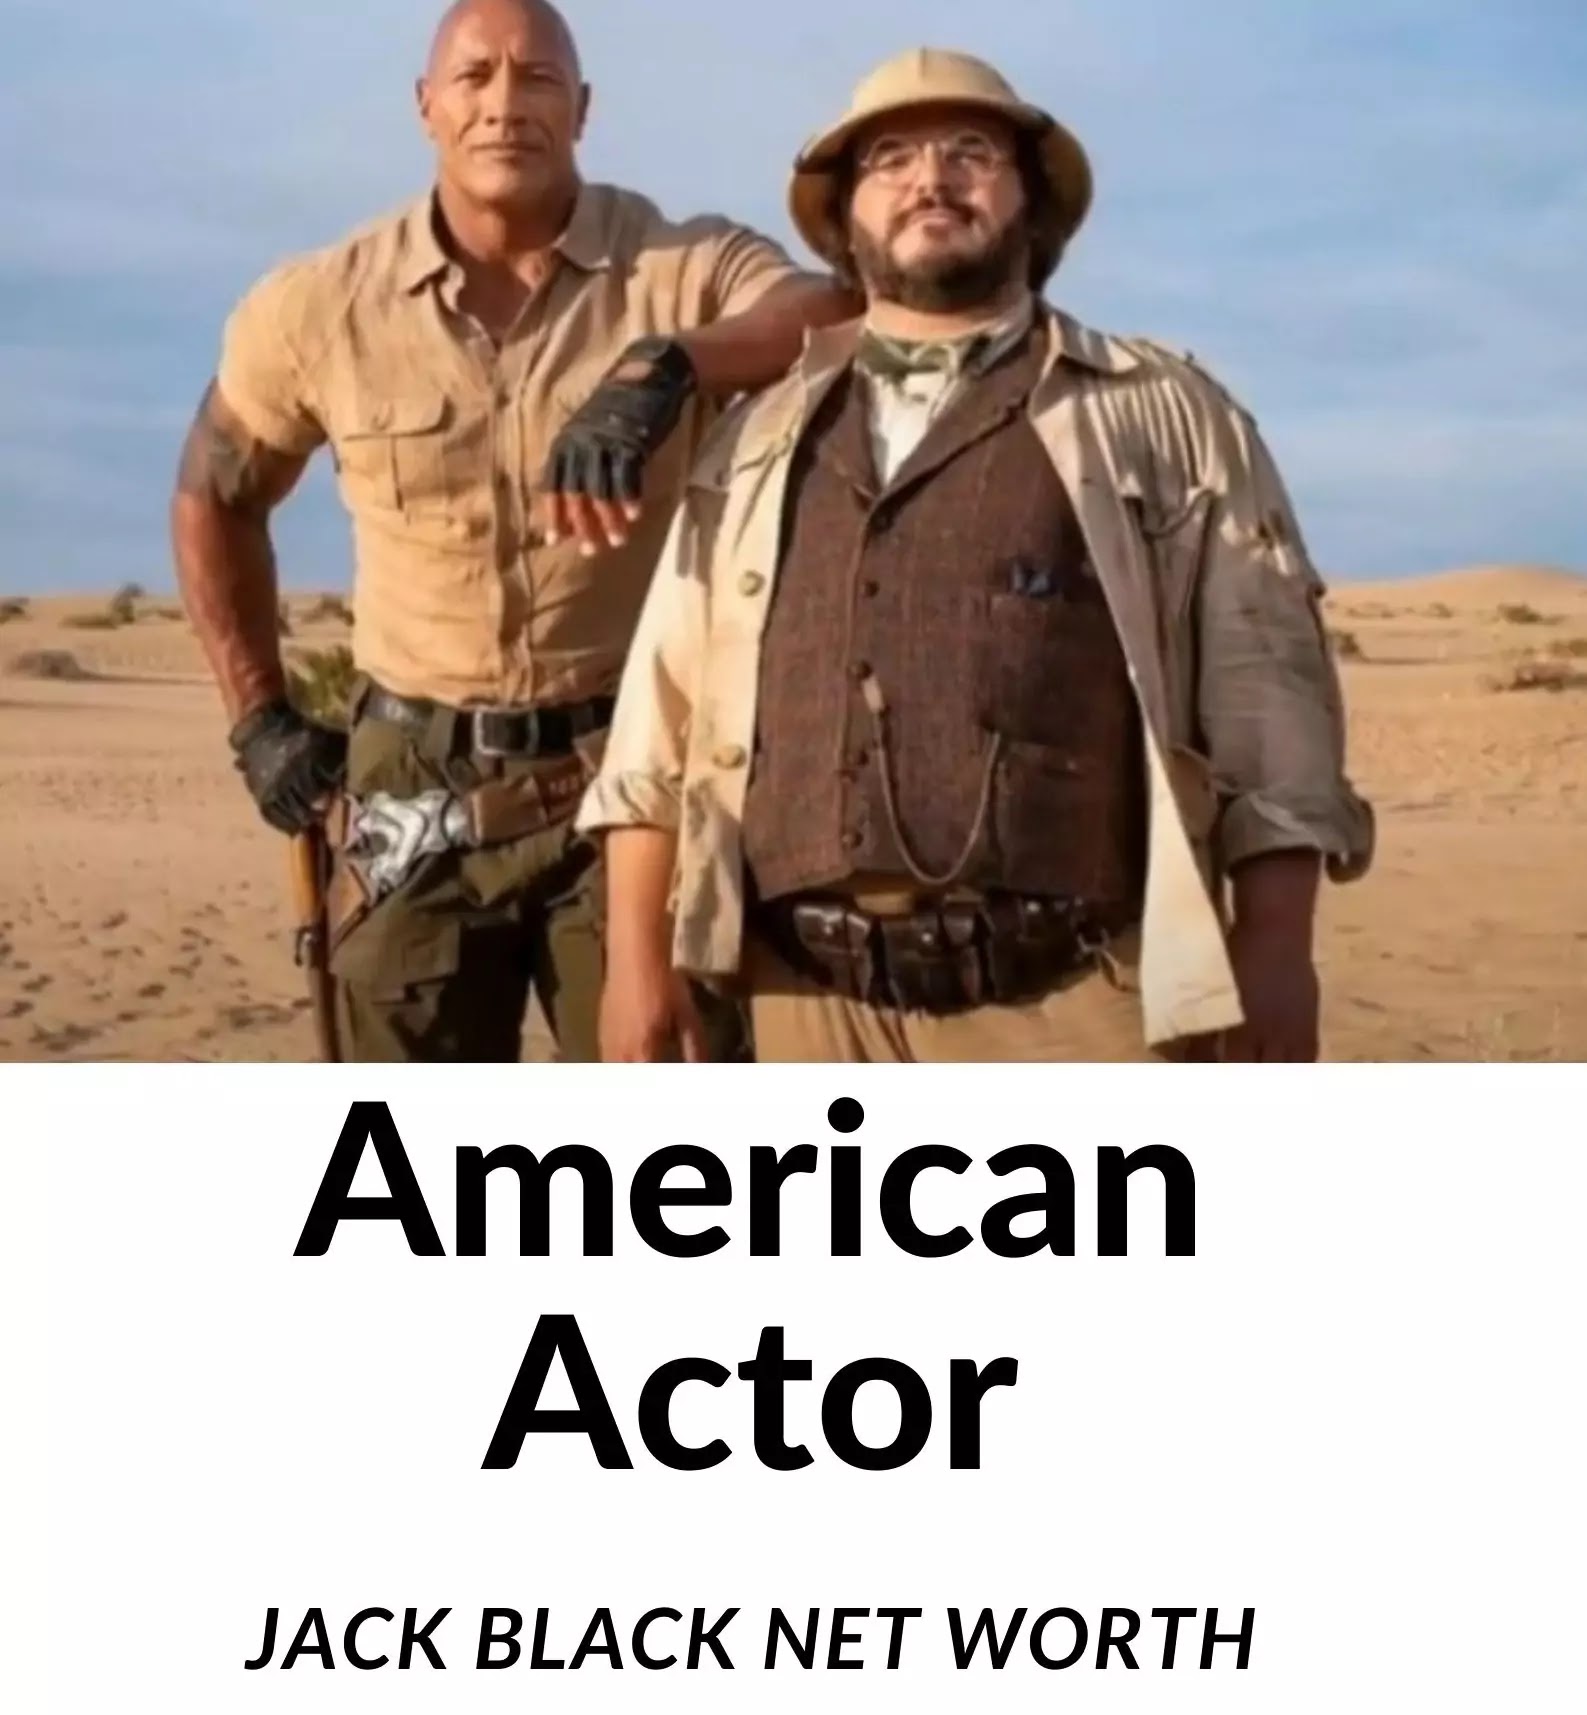 jack black net worth